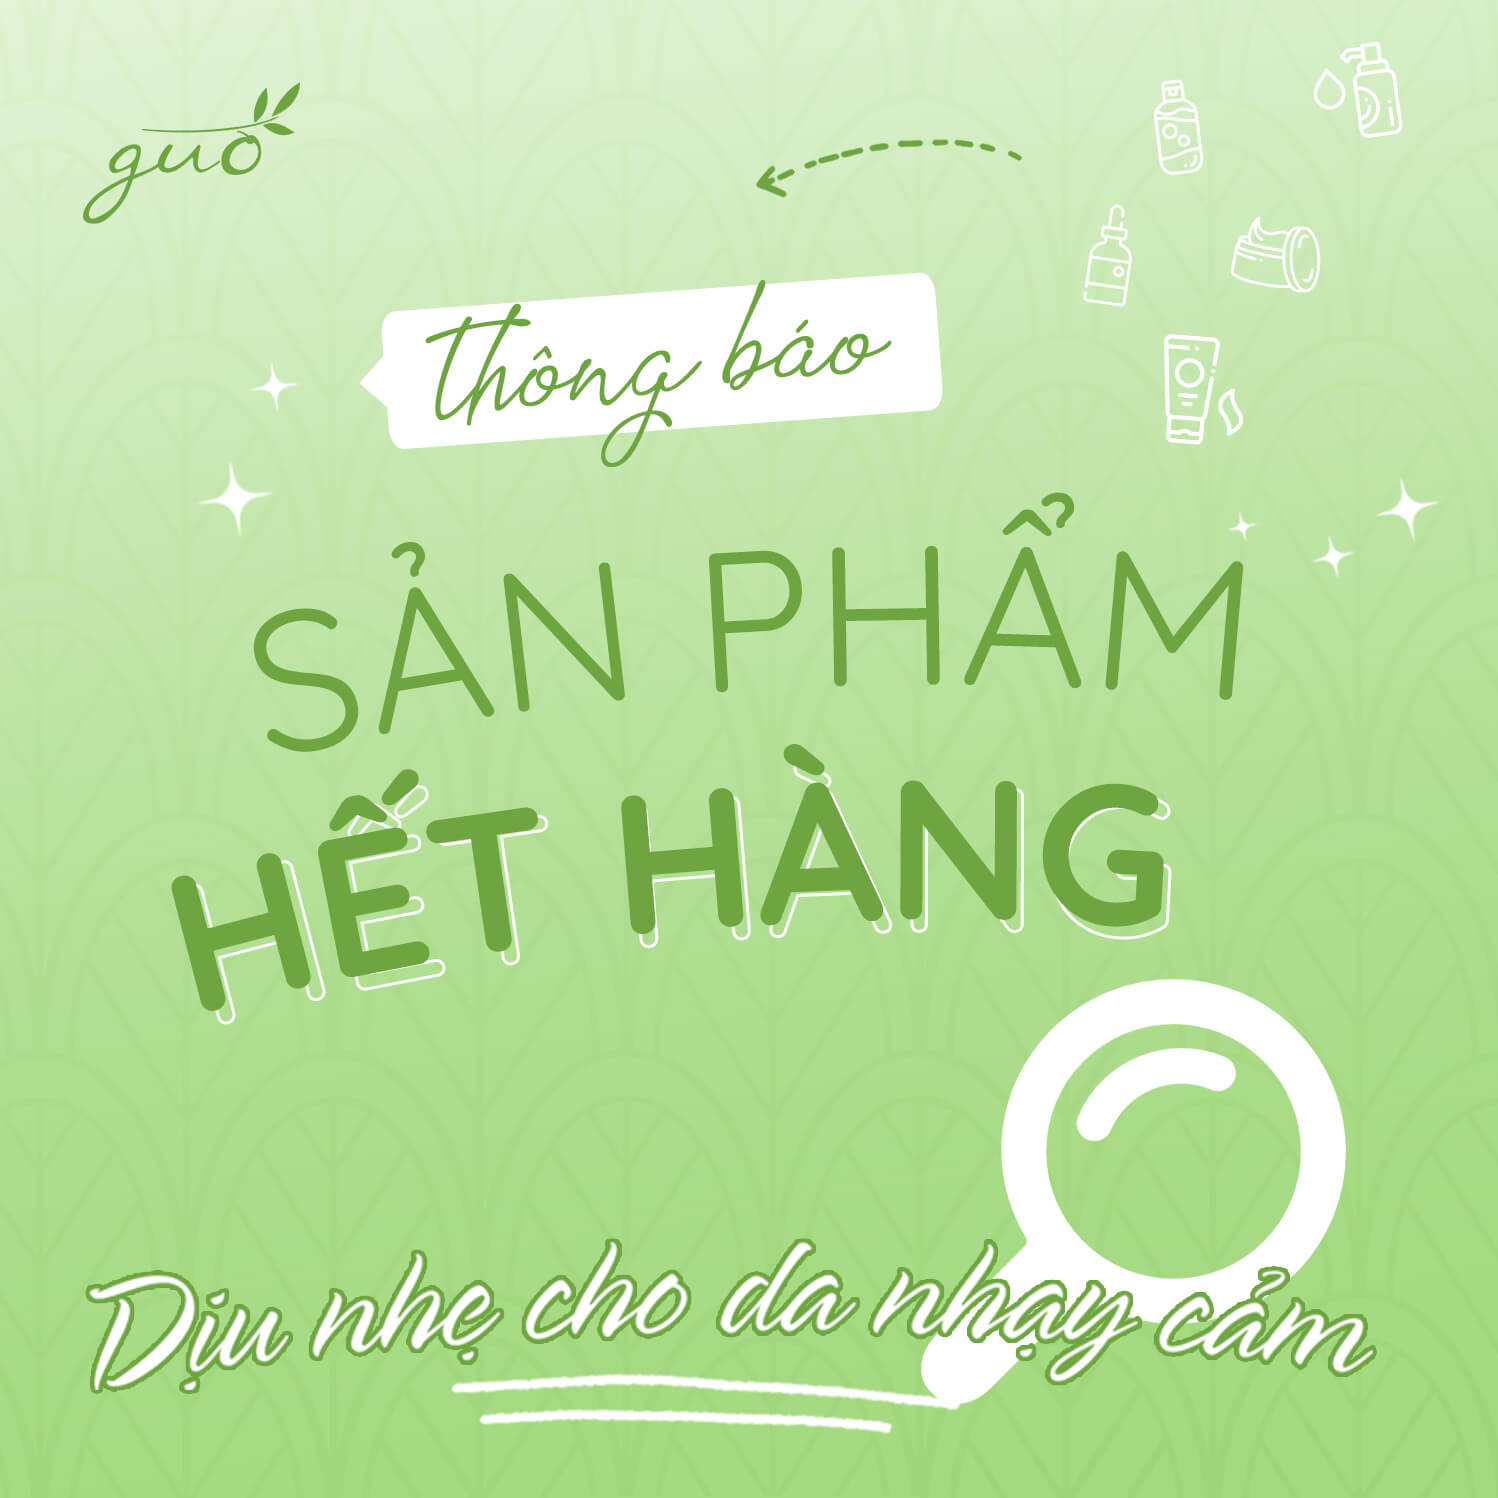 Thong bao san pham het hang